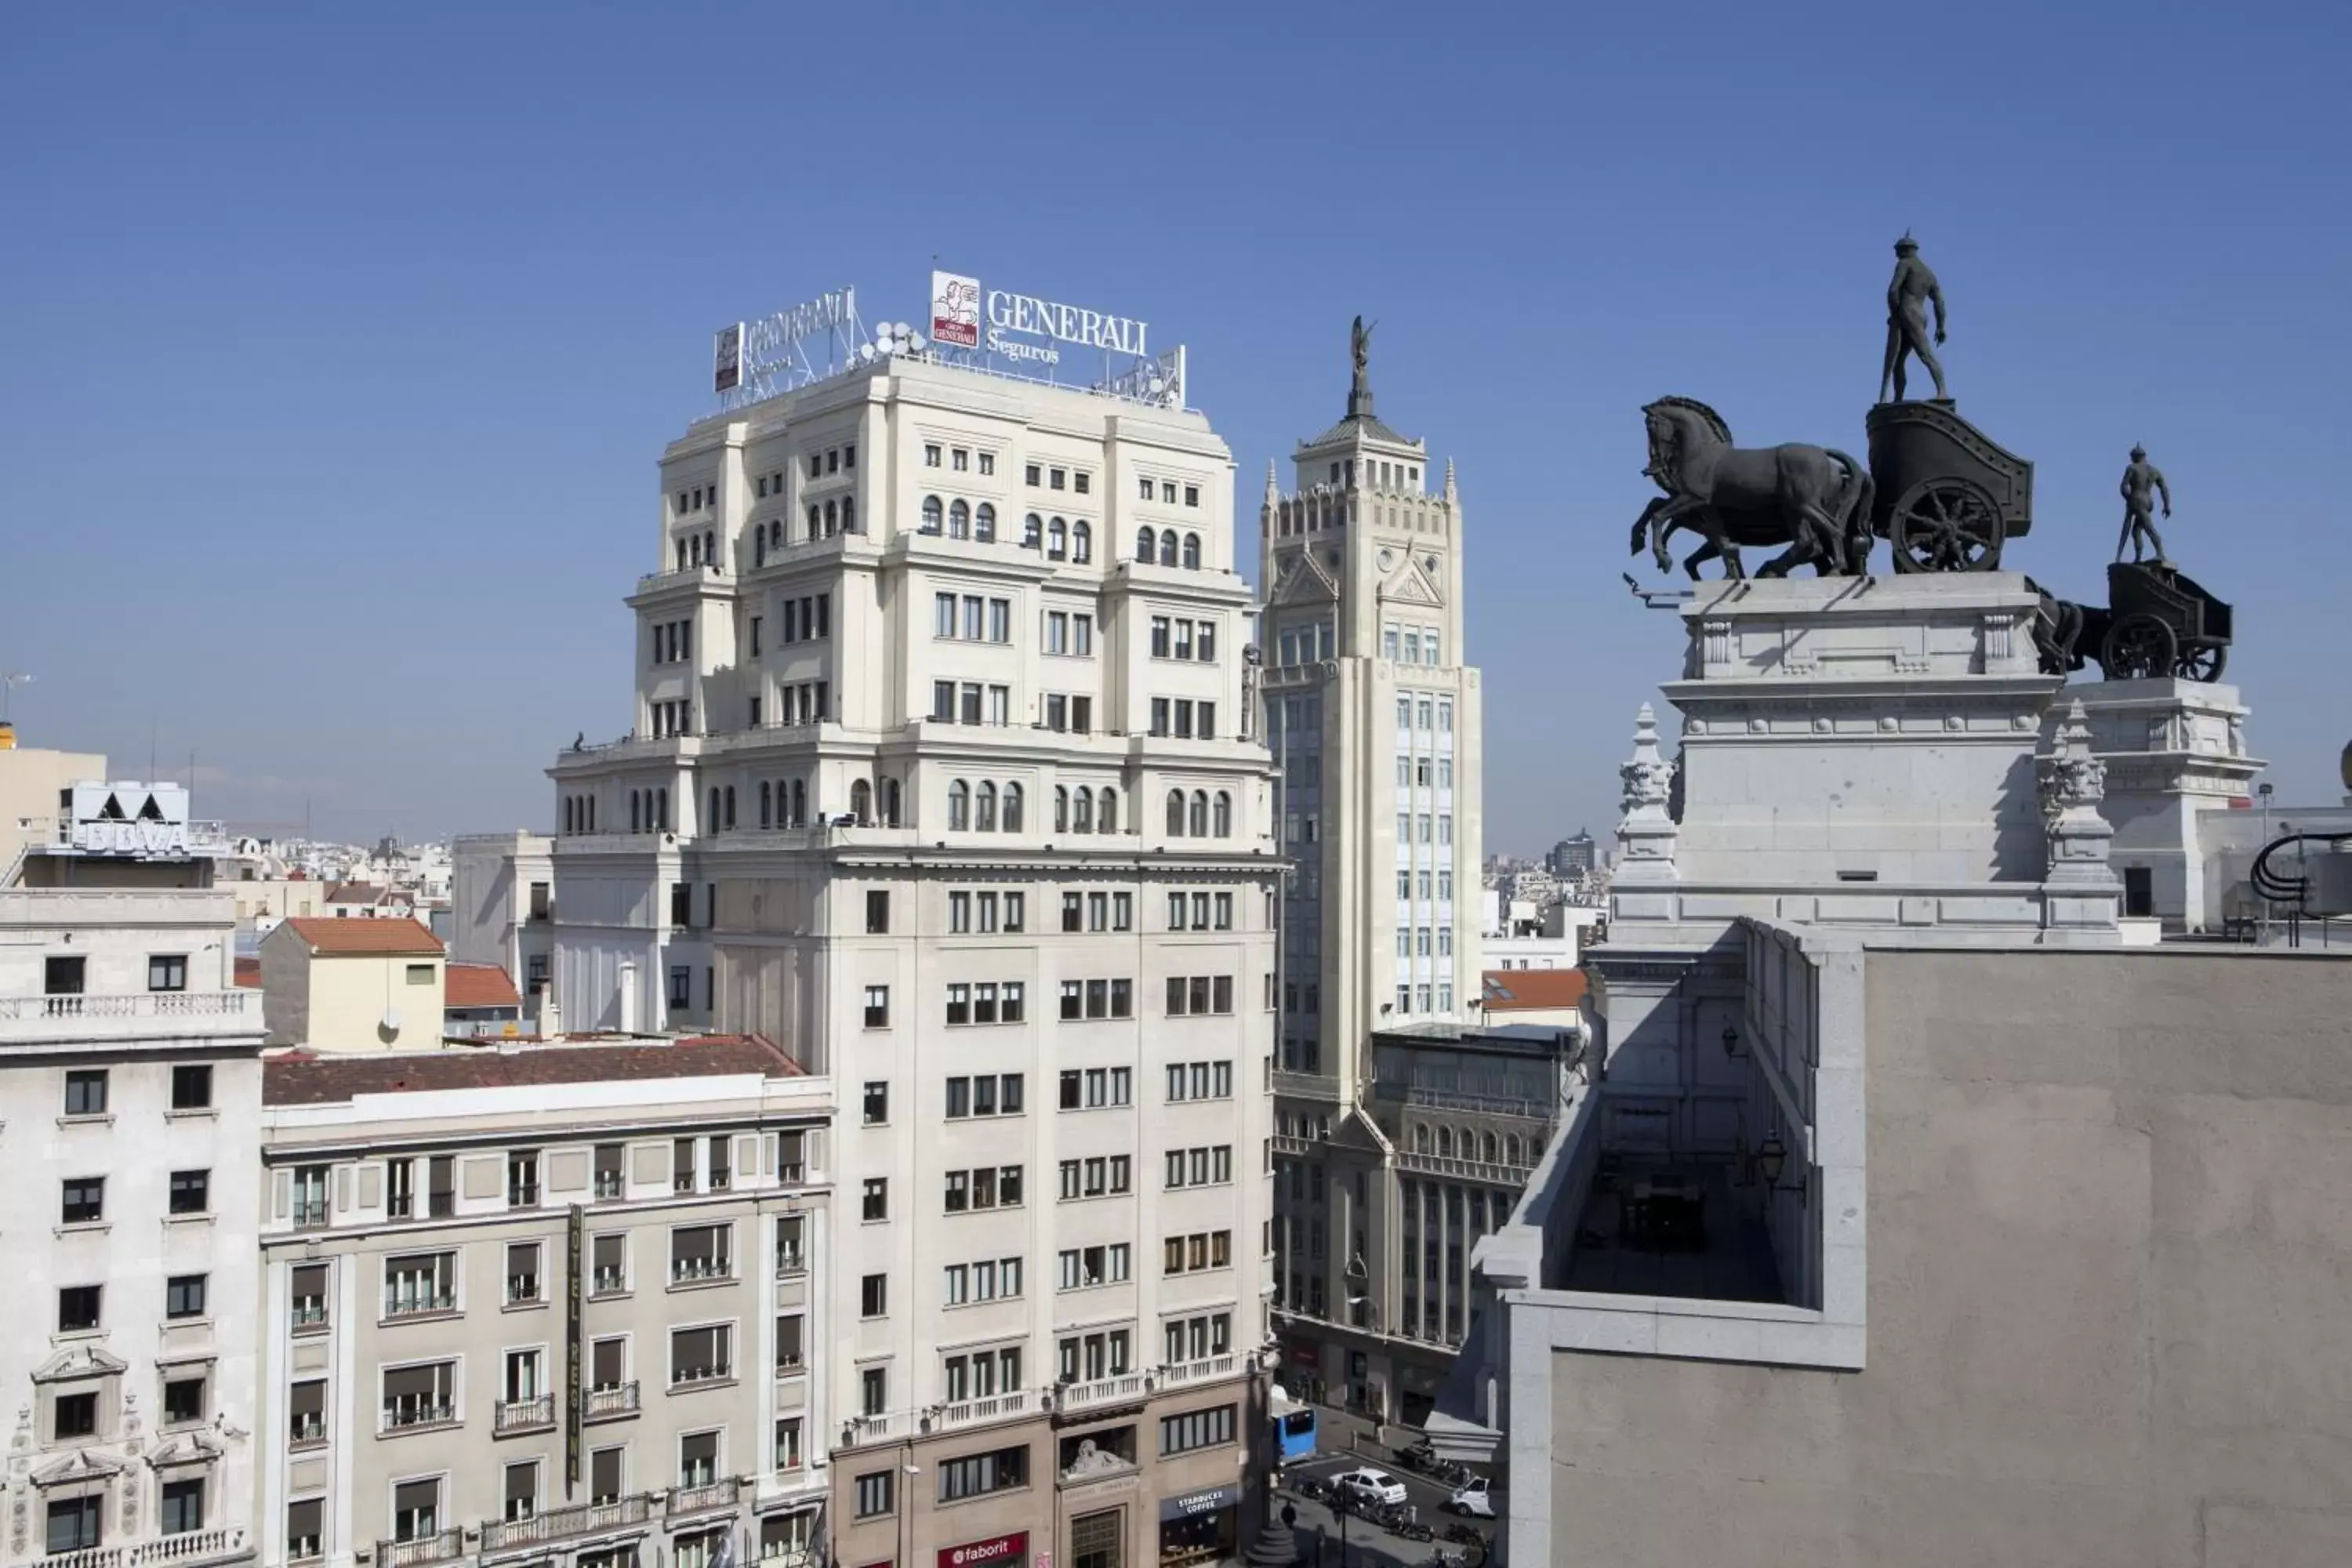 City view in Quatro Puerta del Sol